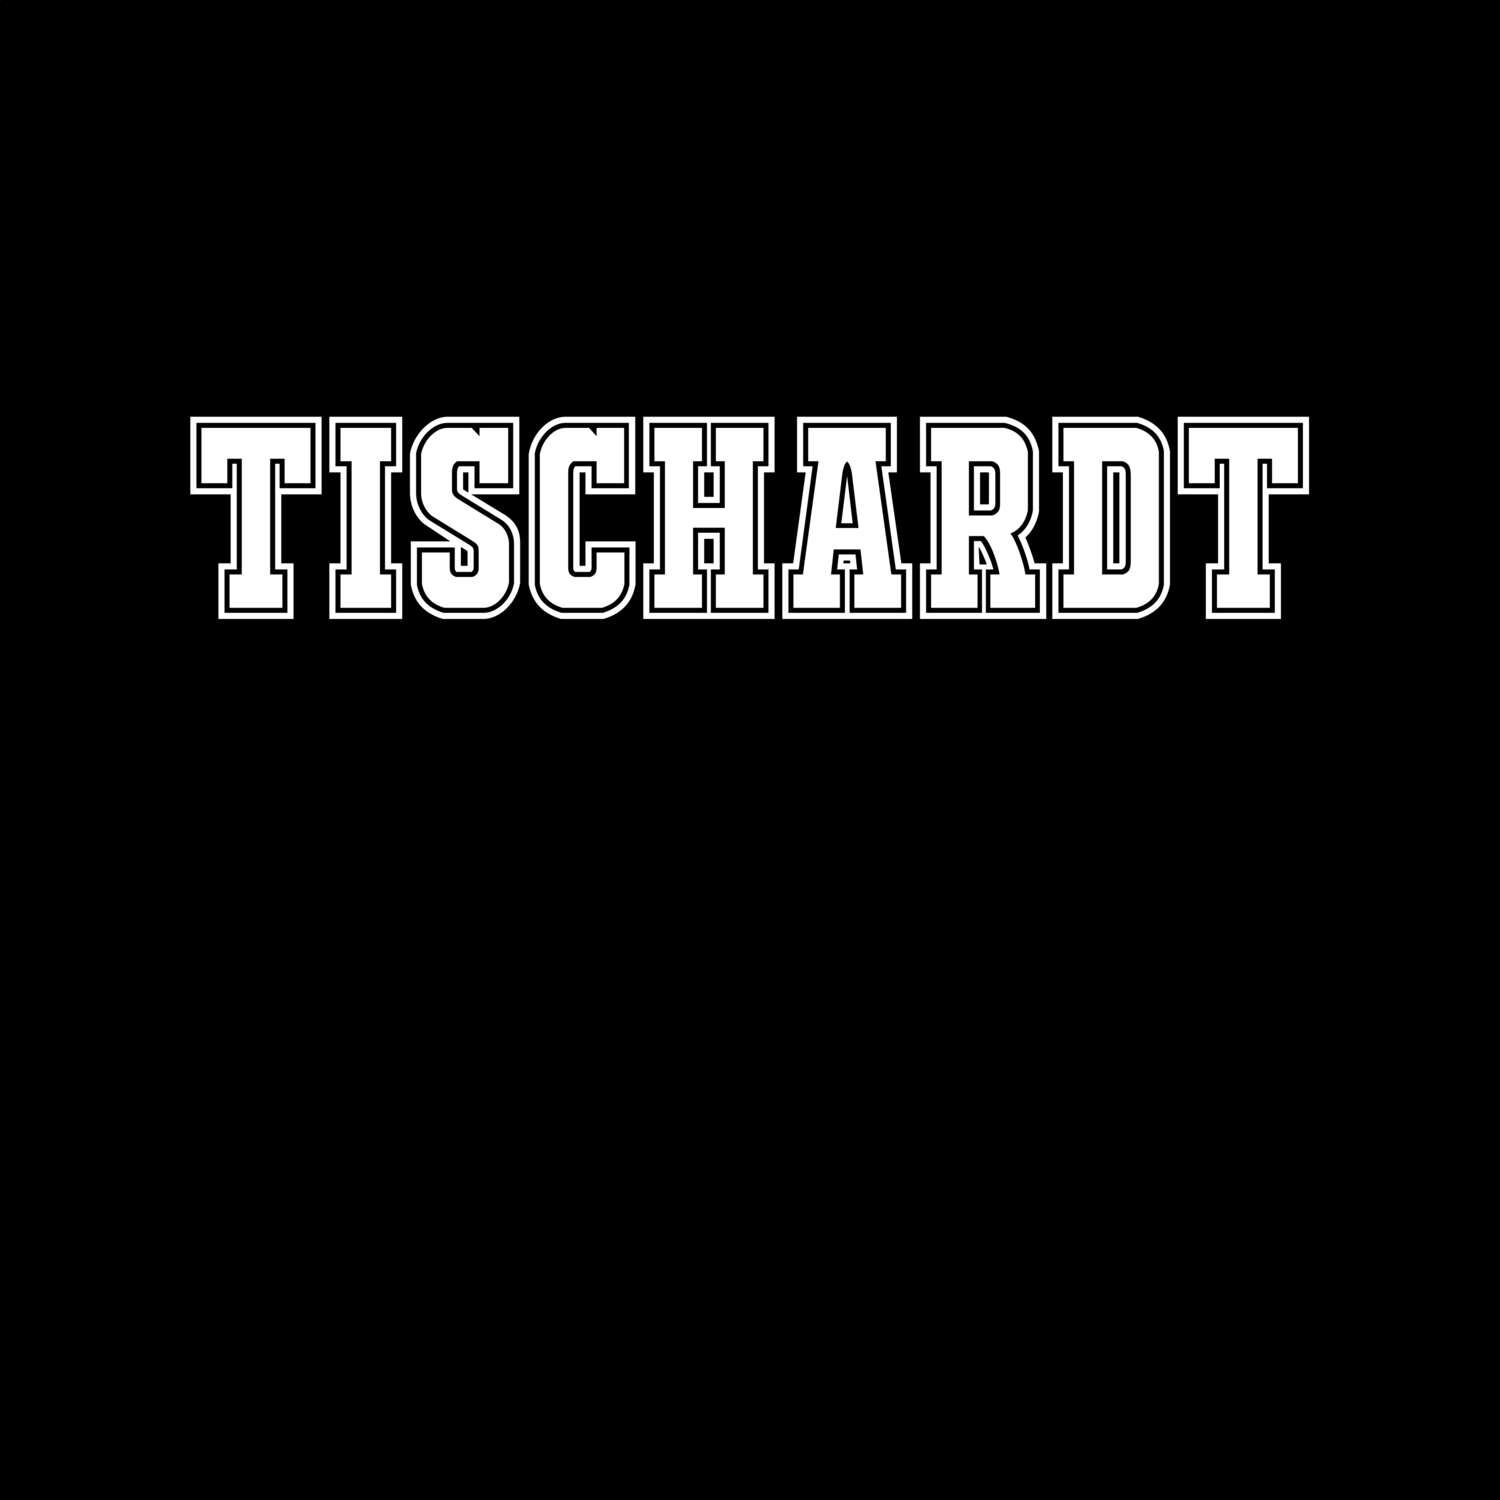 Tischardt T-Shirt »Classic«